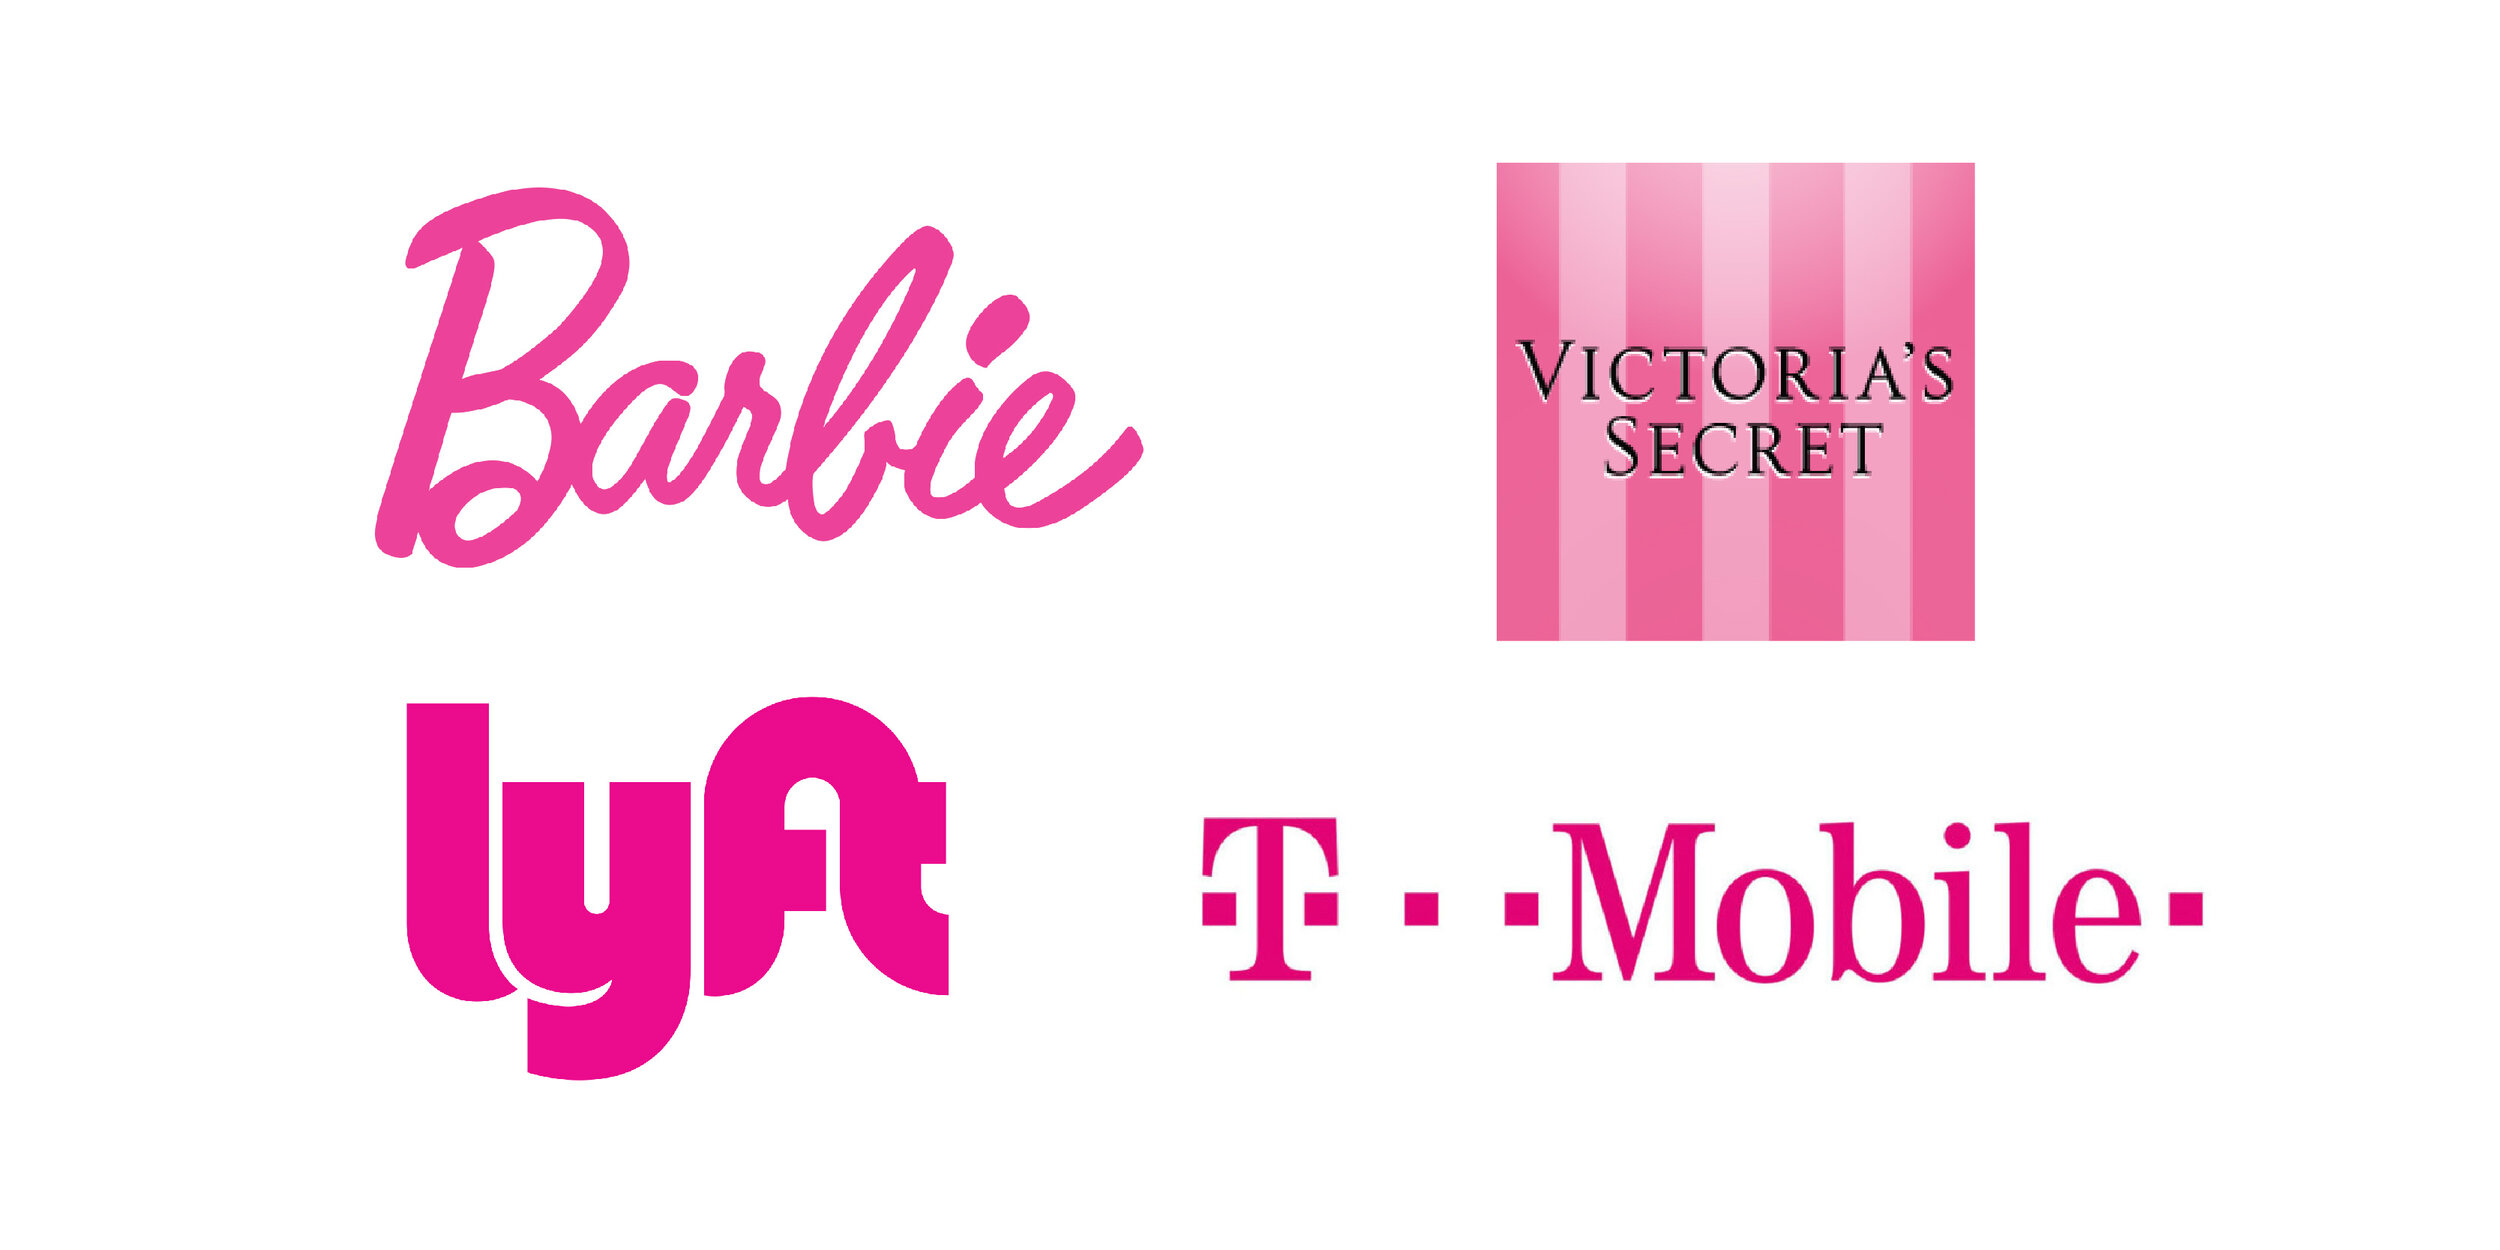 Famous Pink Logos: Daring Companies With Pink Logos